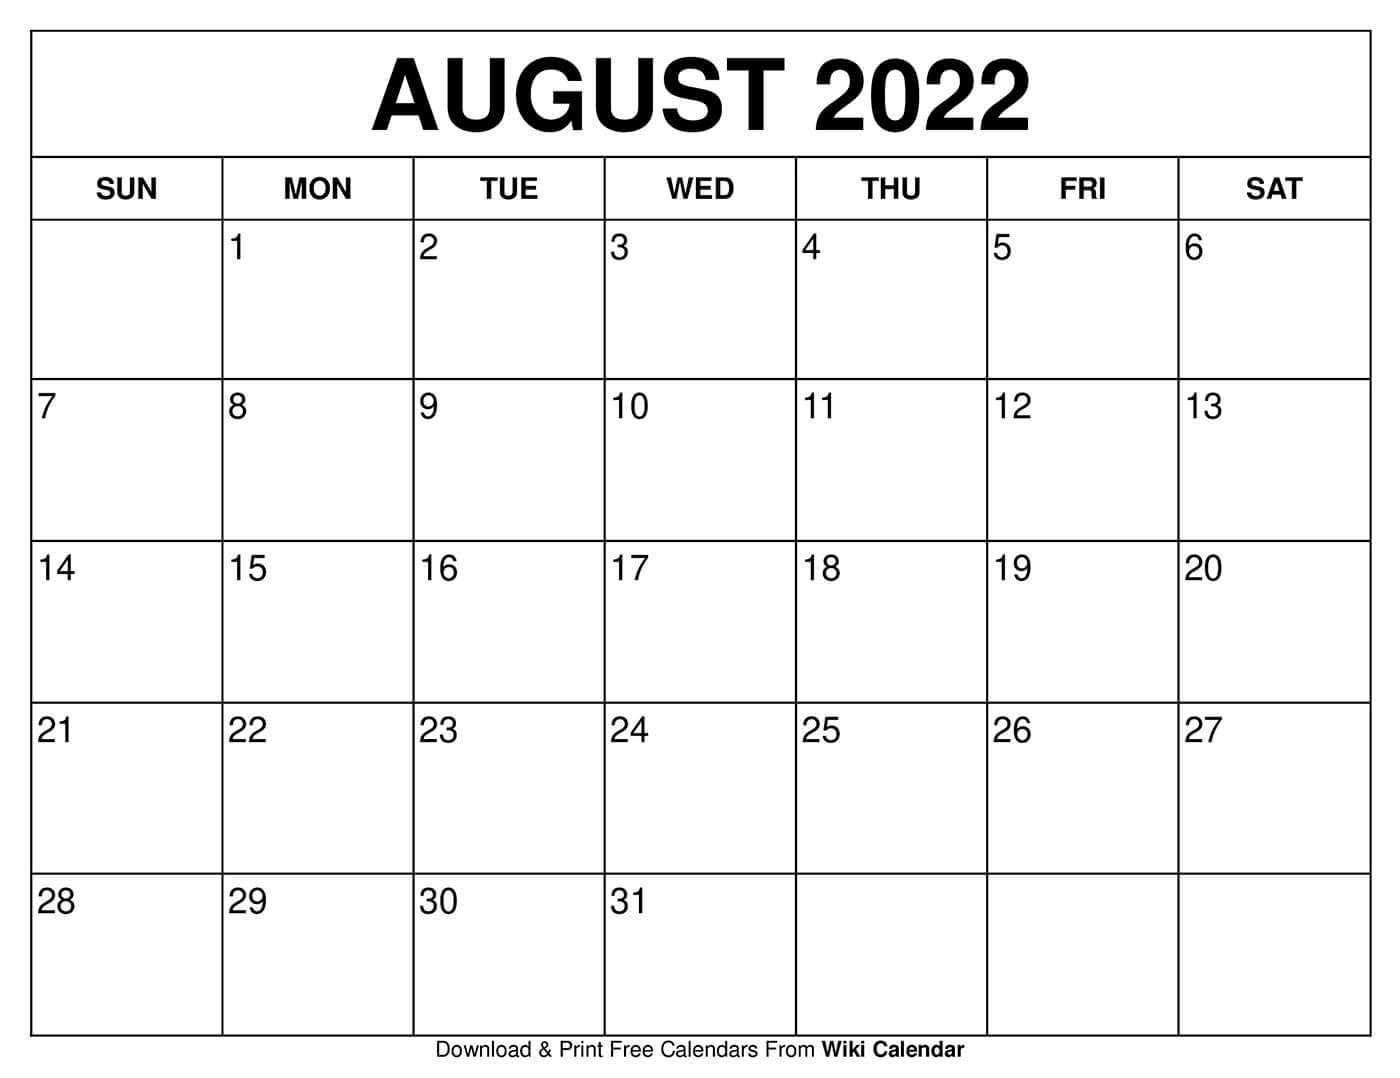 Free Calendar August 2022 Free Printable August 2022 Calendars - Wiki Calendar